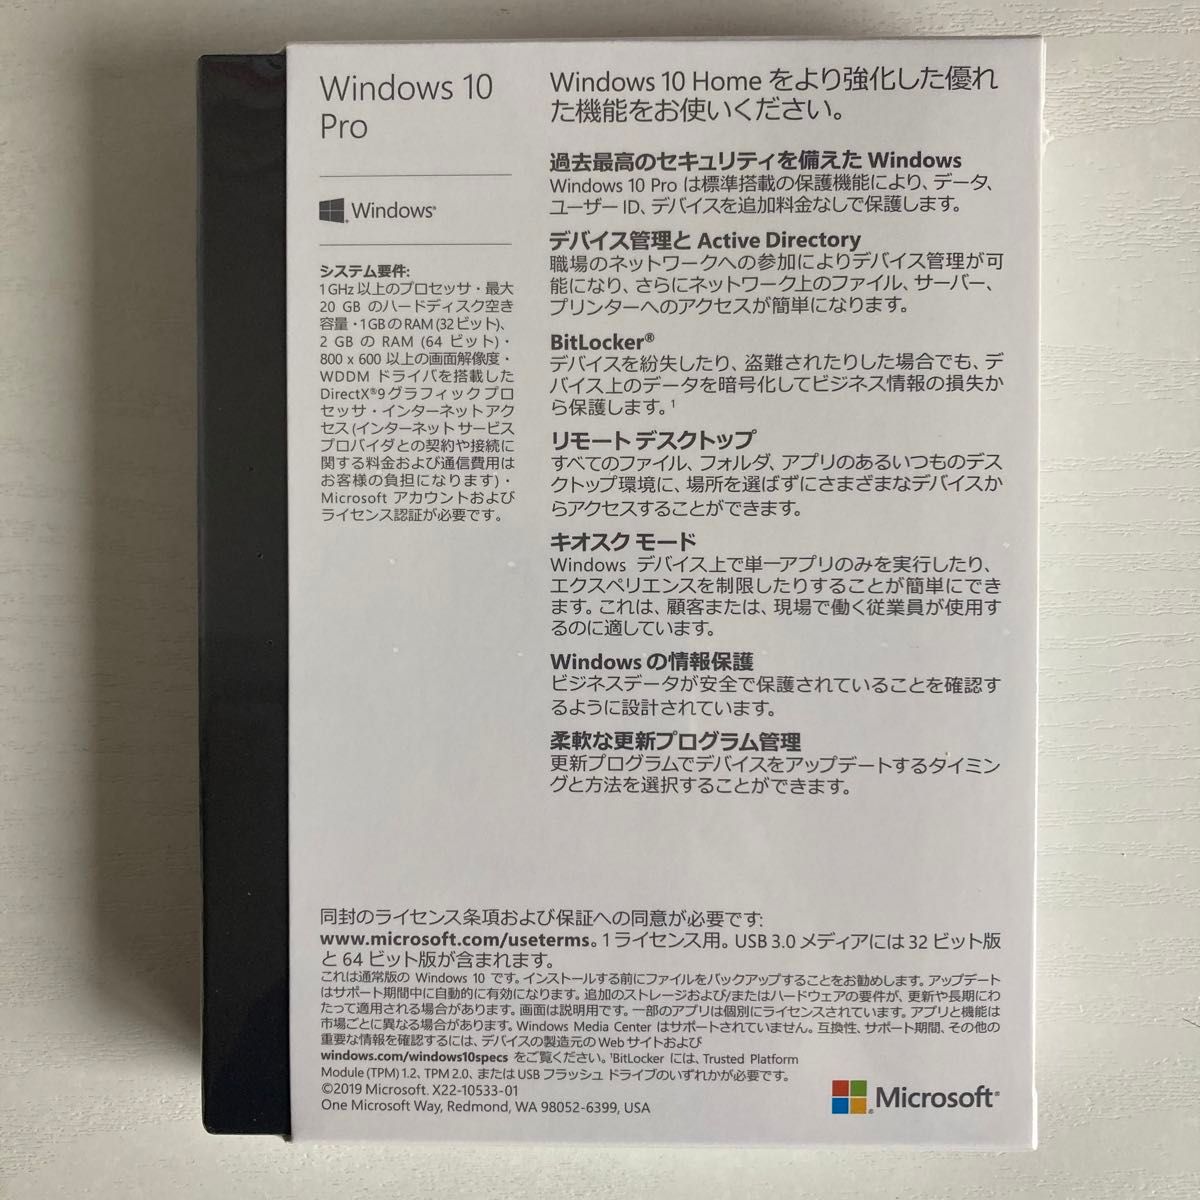 【新品・未開封】 Windows 10 Pro パッケージ版 USB Microsoft 32bit 64bit  OS 日本語